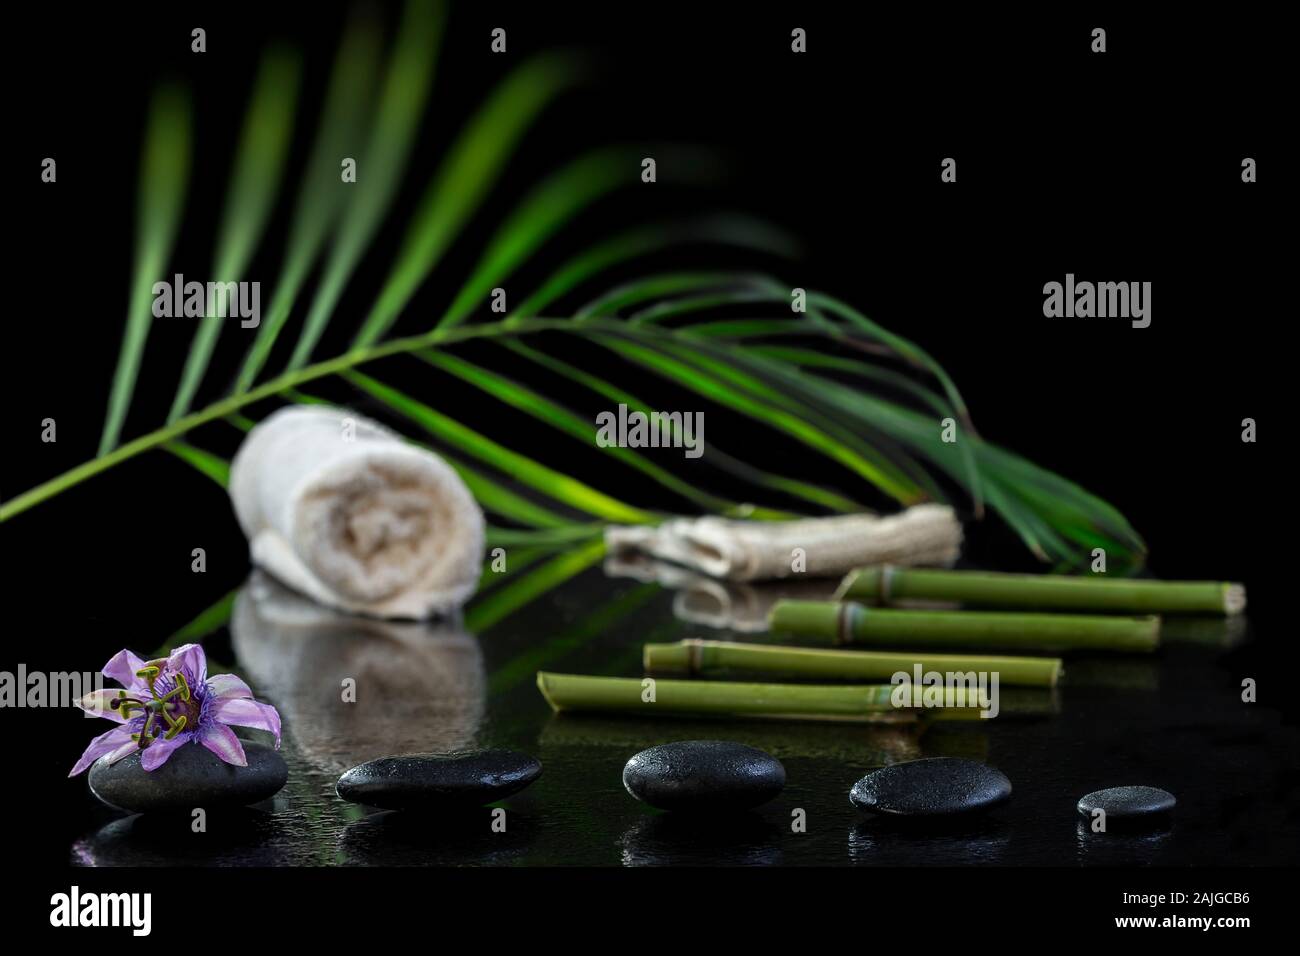 Hermoso balneario composición con passiflora, bambú y piedras sobre fondo negro Foto de stock